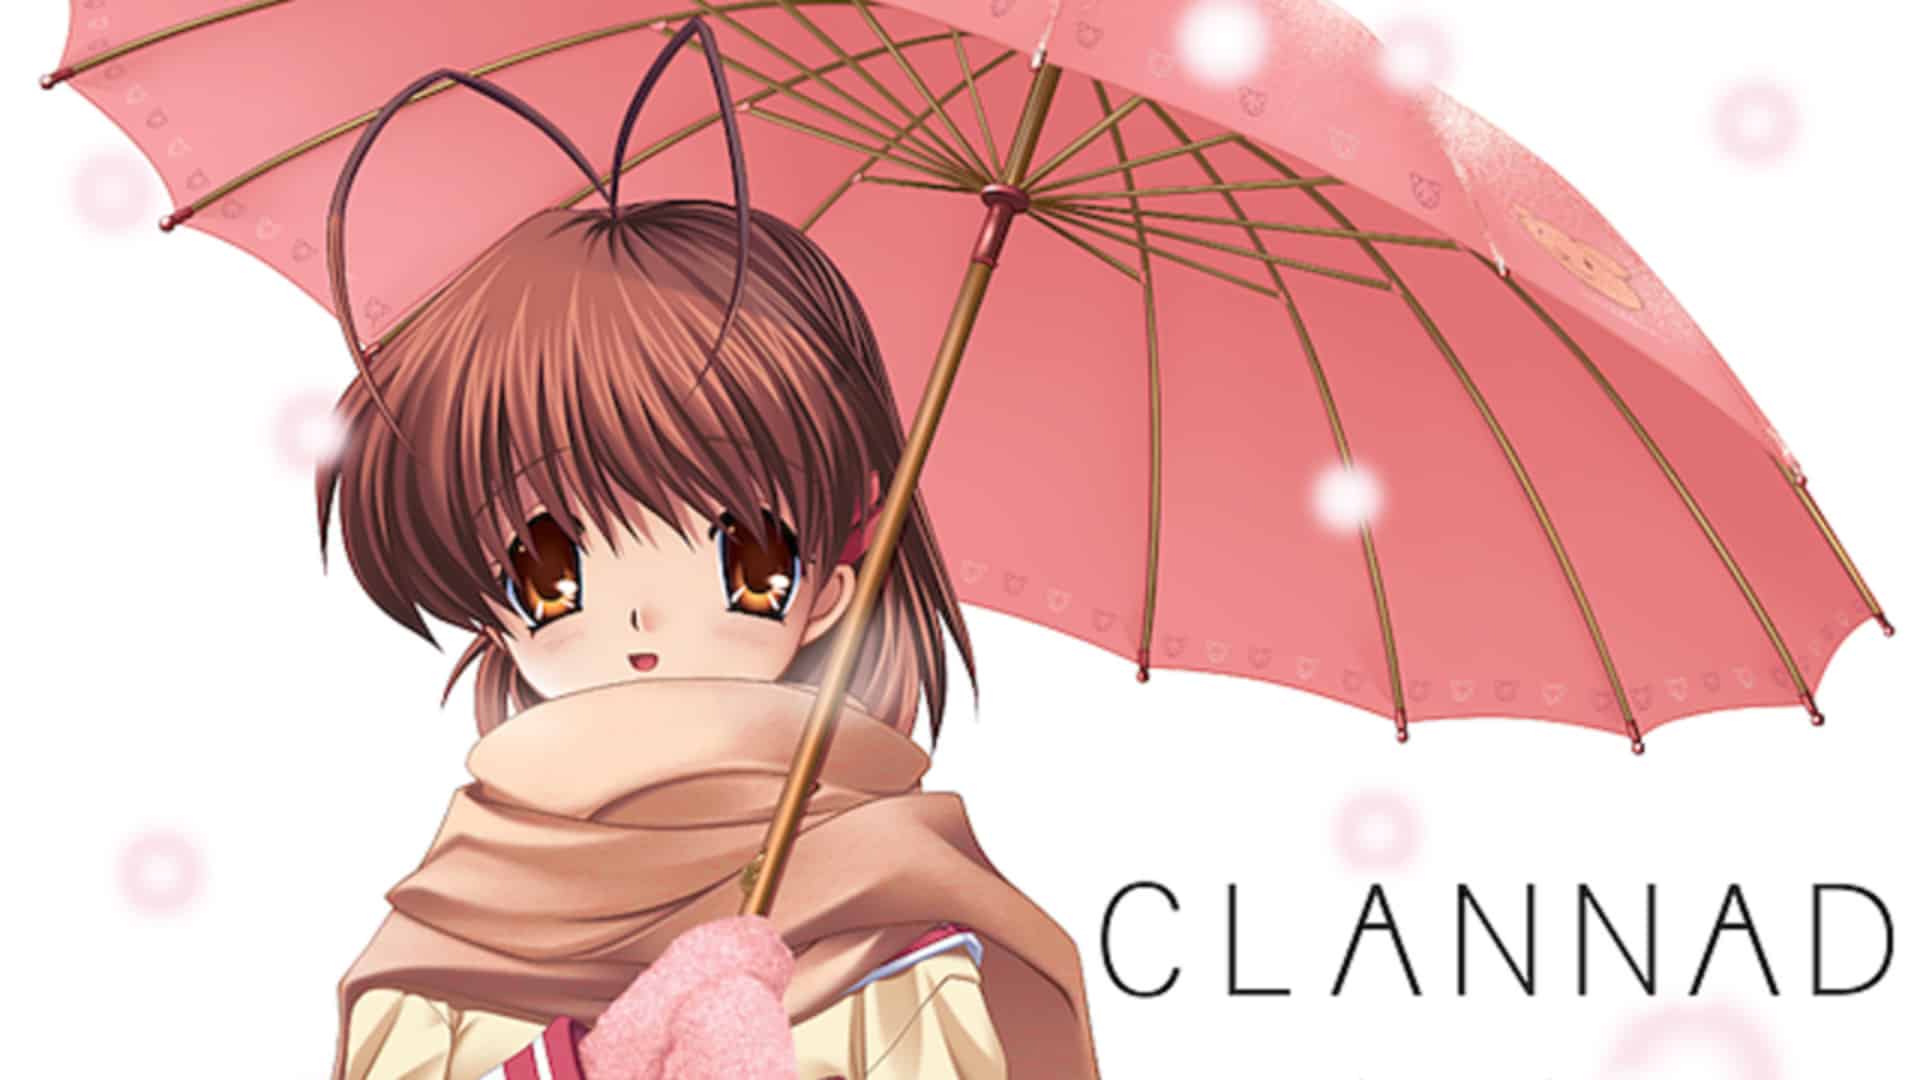 Nagisa from Clannad: Visual Novel